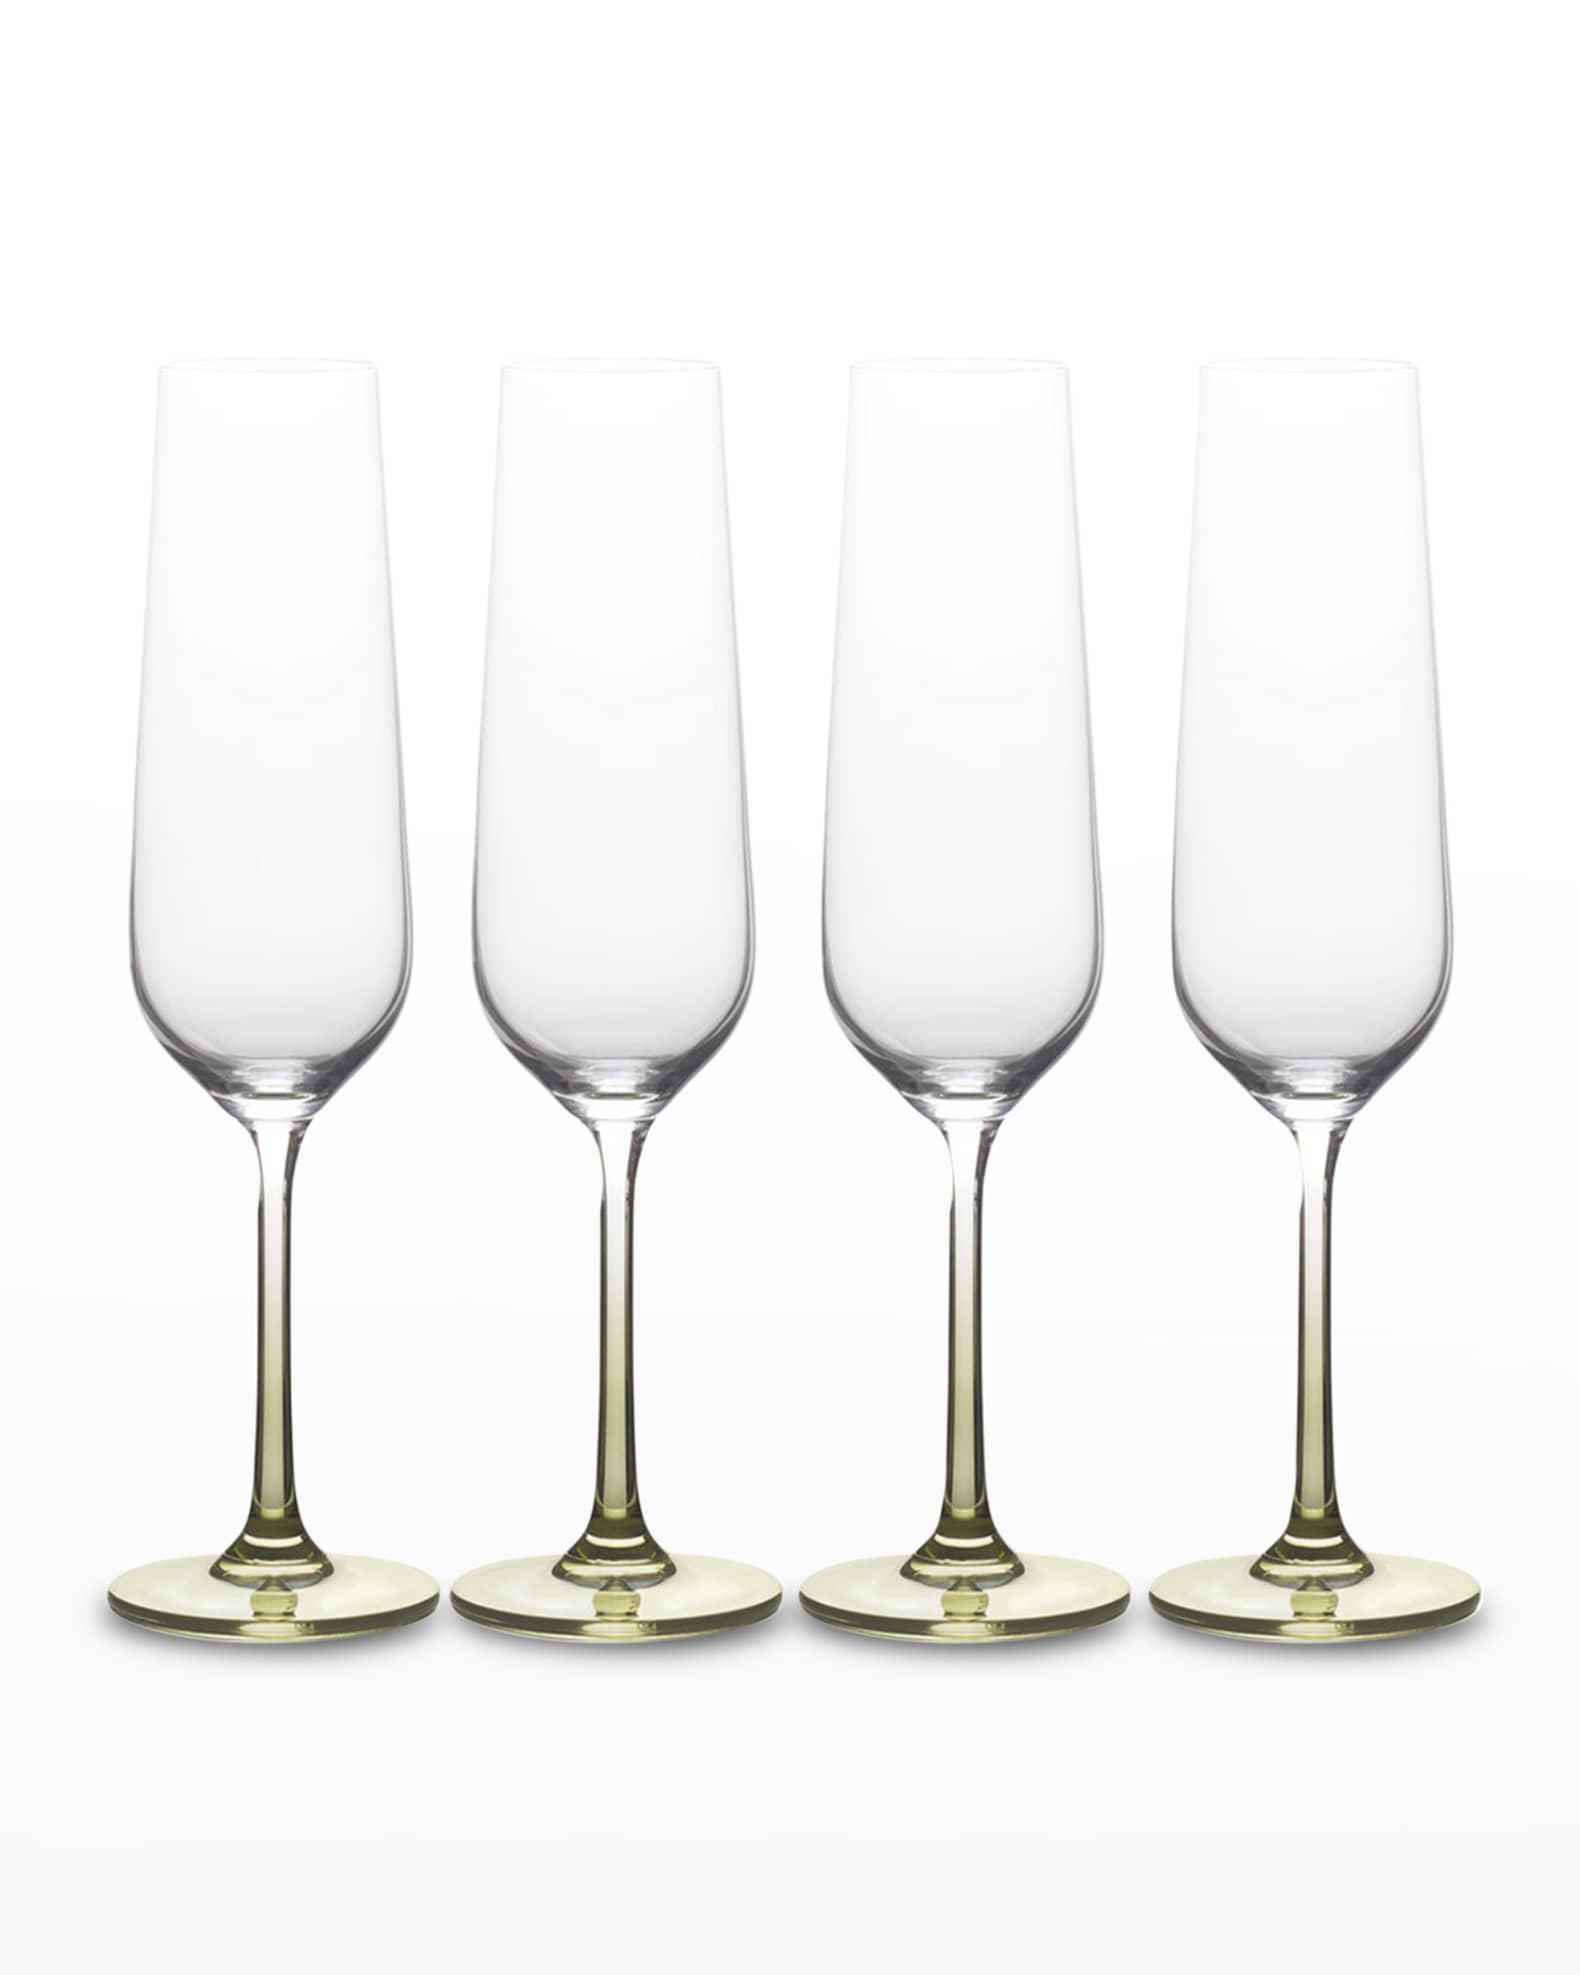 Mikasa Gianna 7 oz. Champagne Flutes, Set of 4